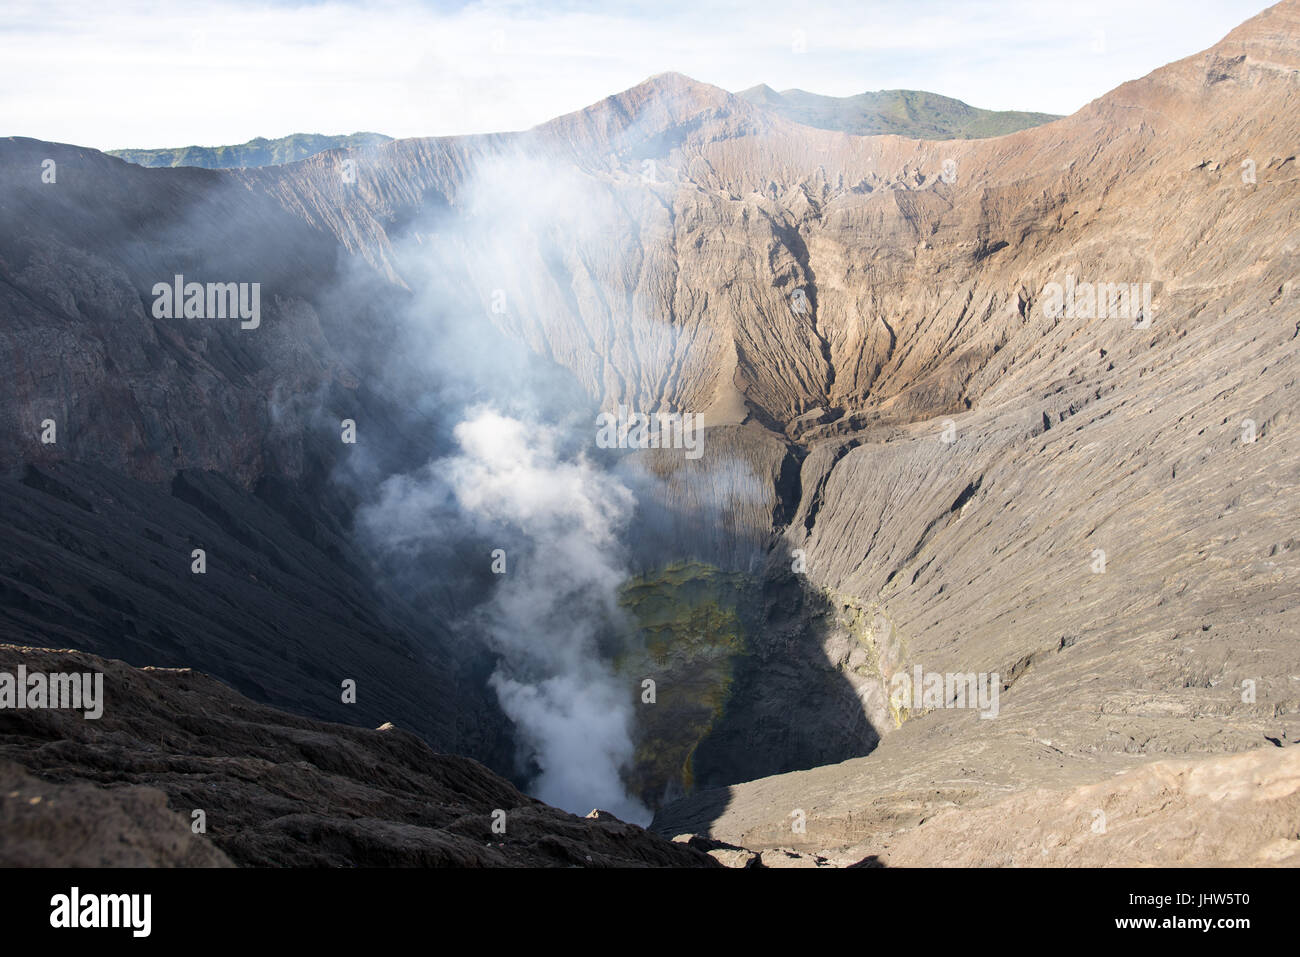 Krater des Mount Bromo Vulkan mit Continious sulphur Emission, Ost-Java Indonesien. Stockfoto